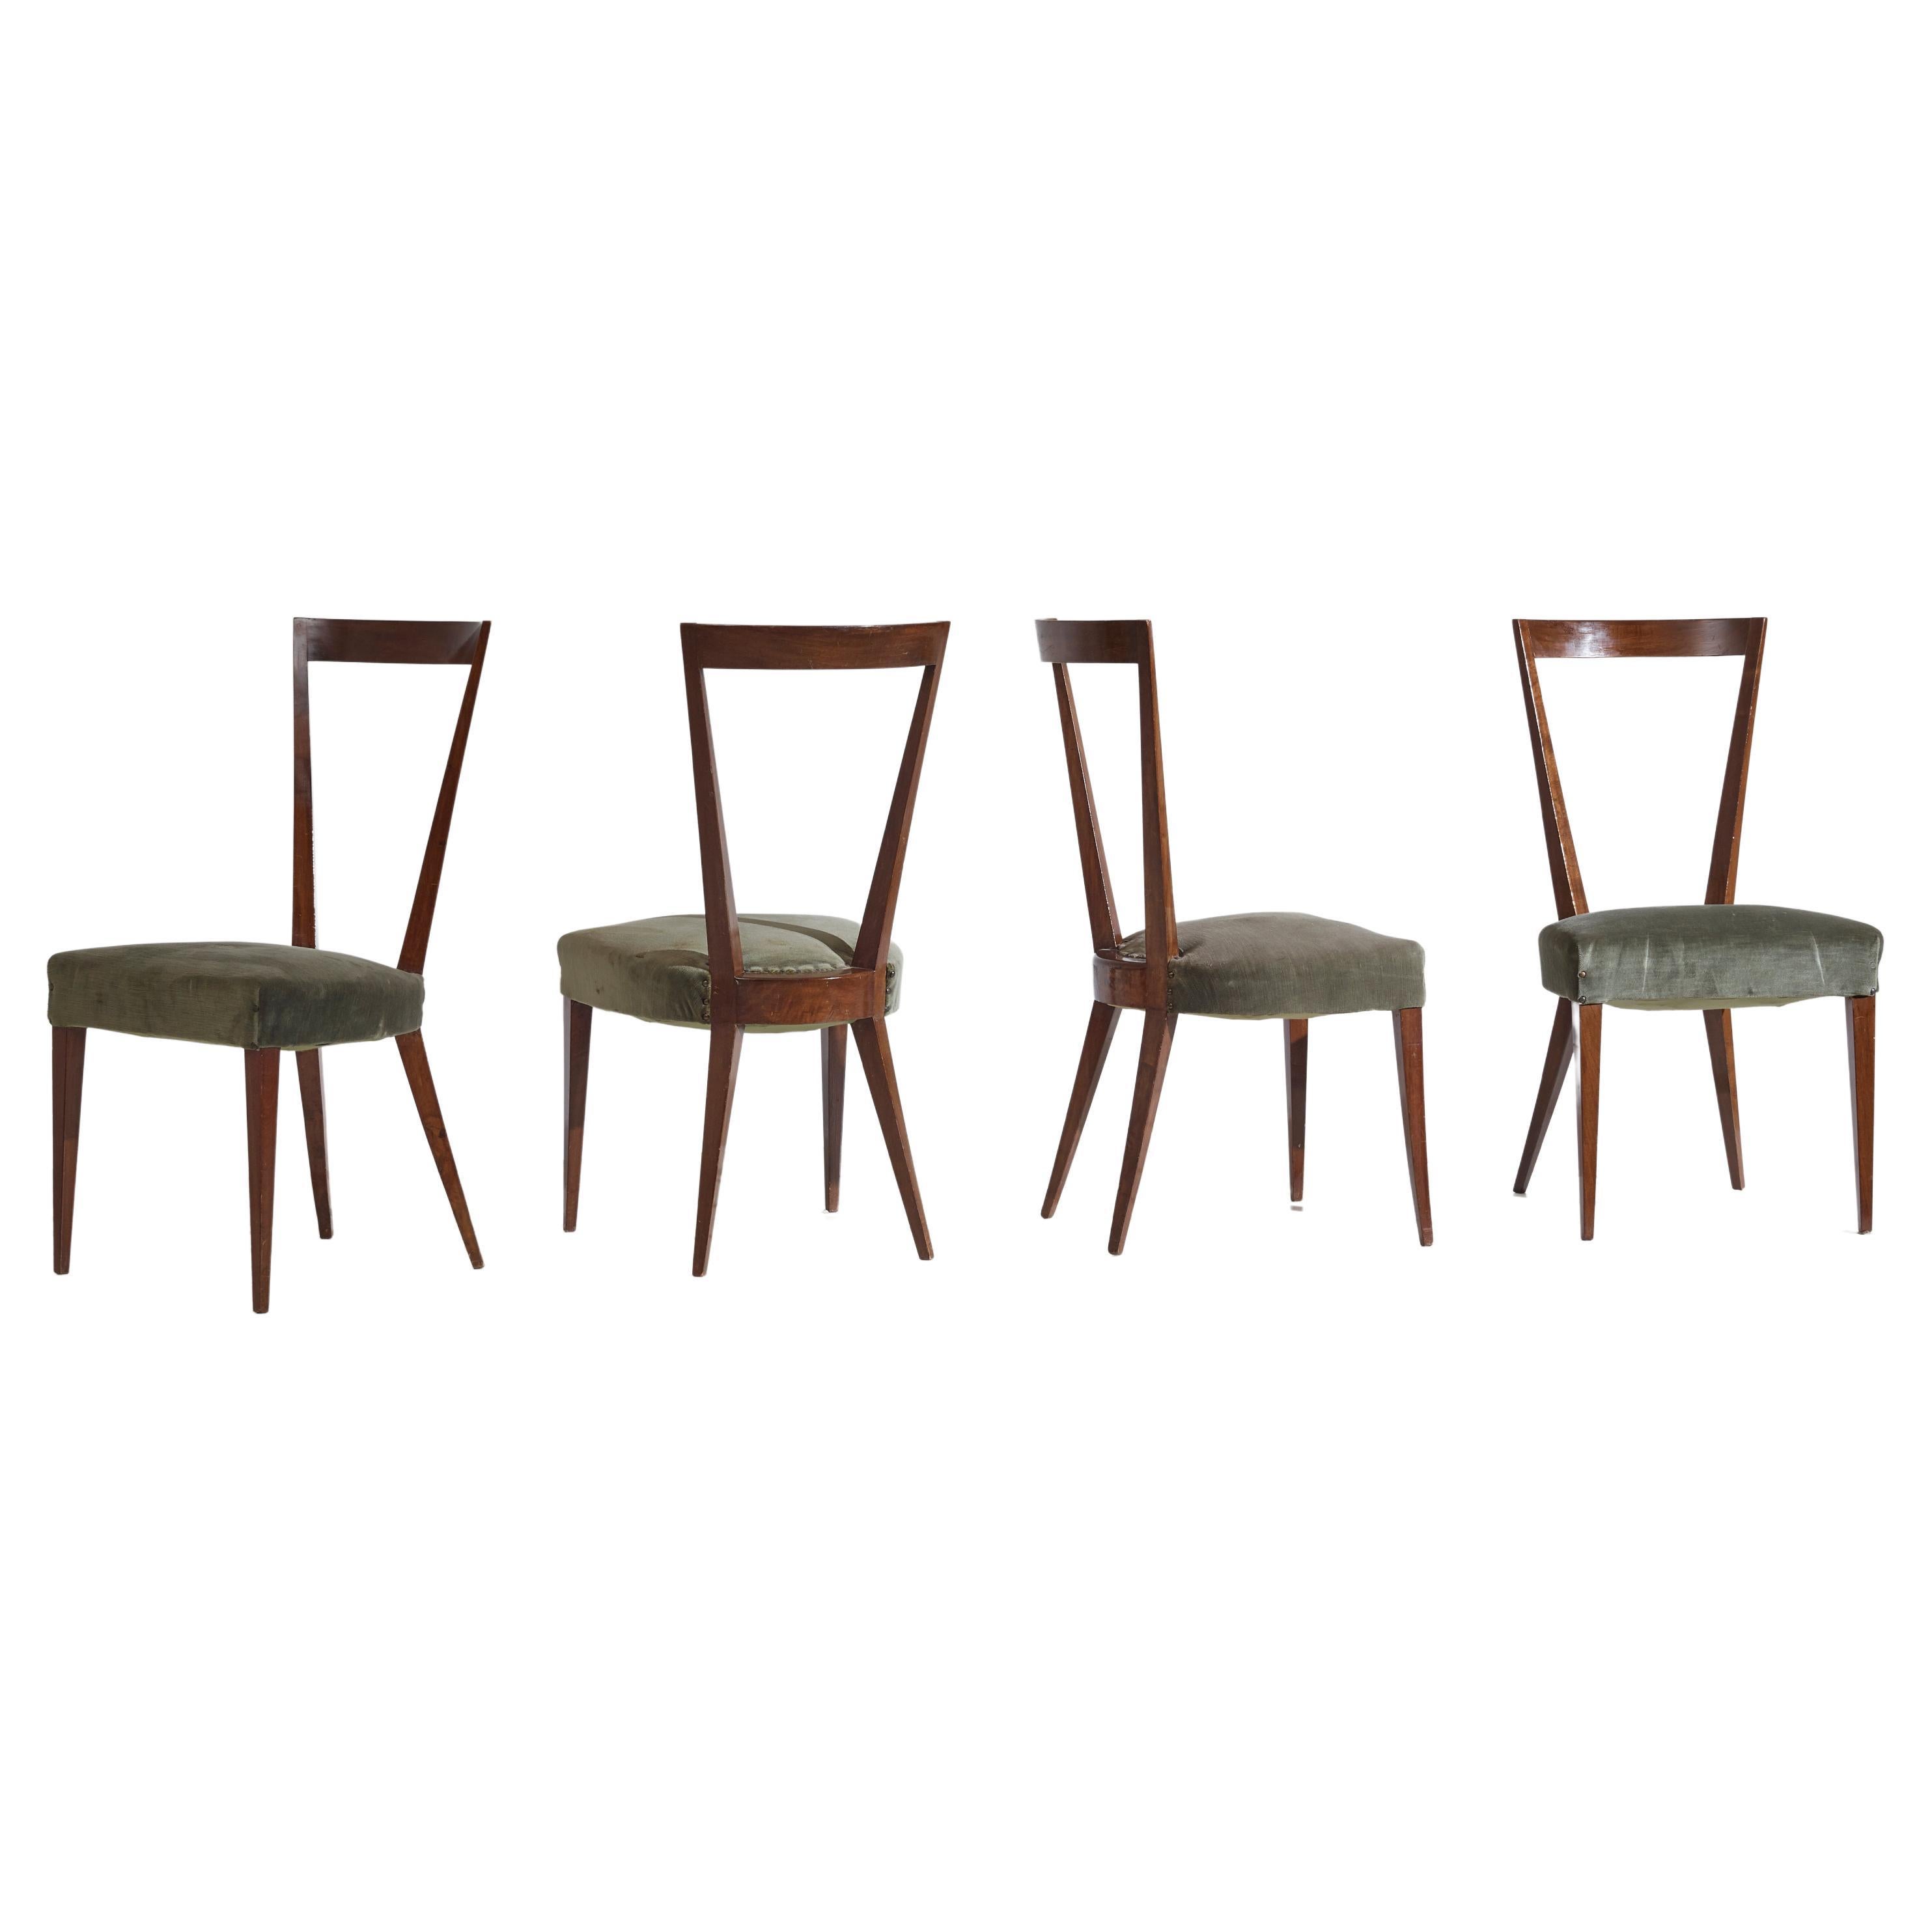 Gio Ponti for Casa E Giardino 1938 - Set of 4 Chairs in Walnut and Velvet Fabric